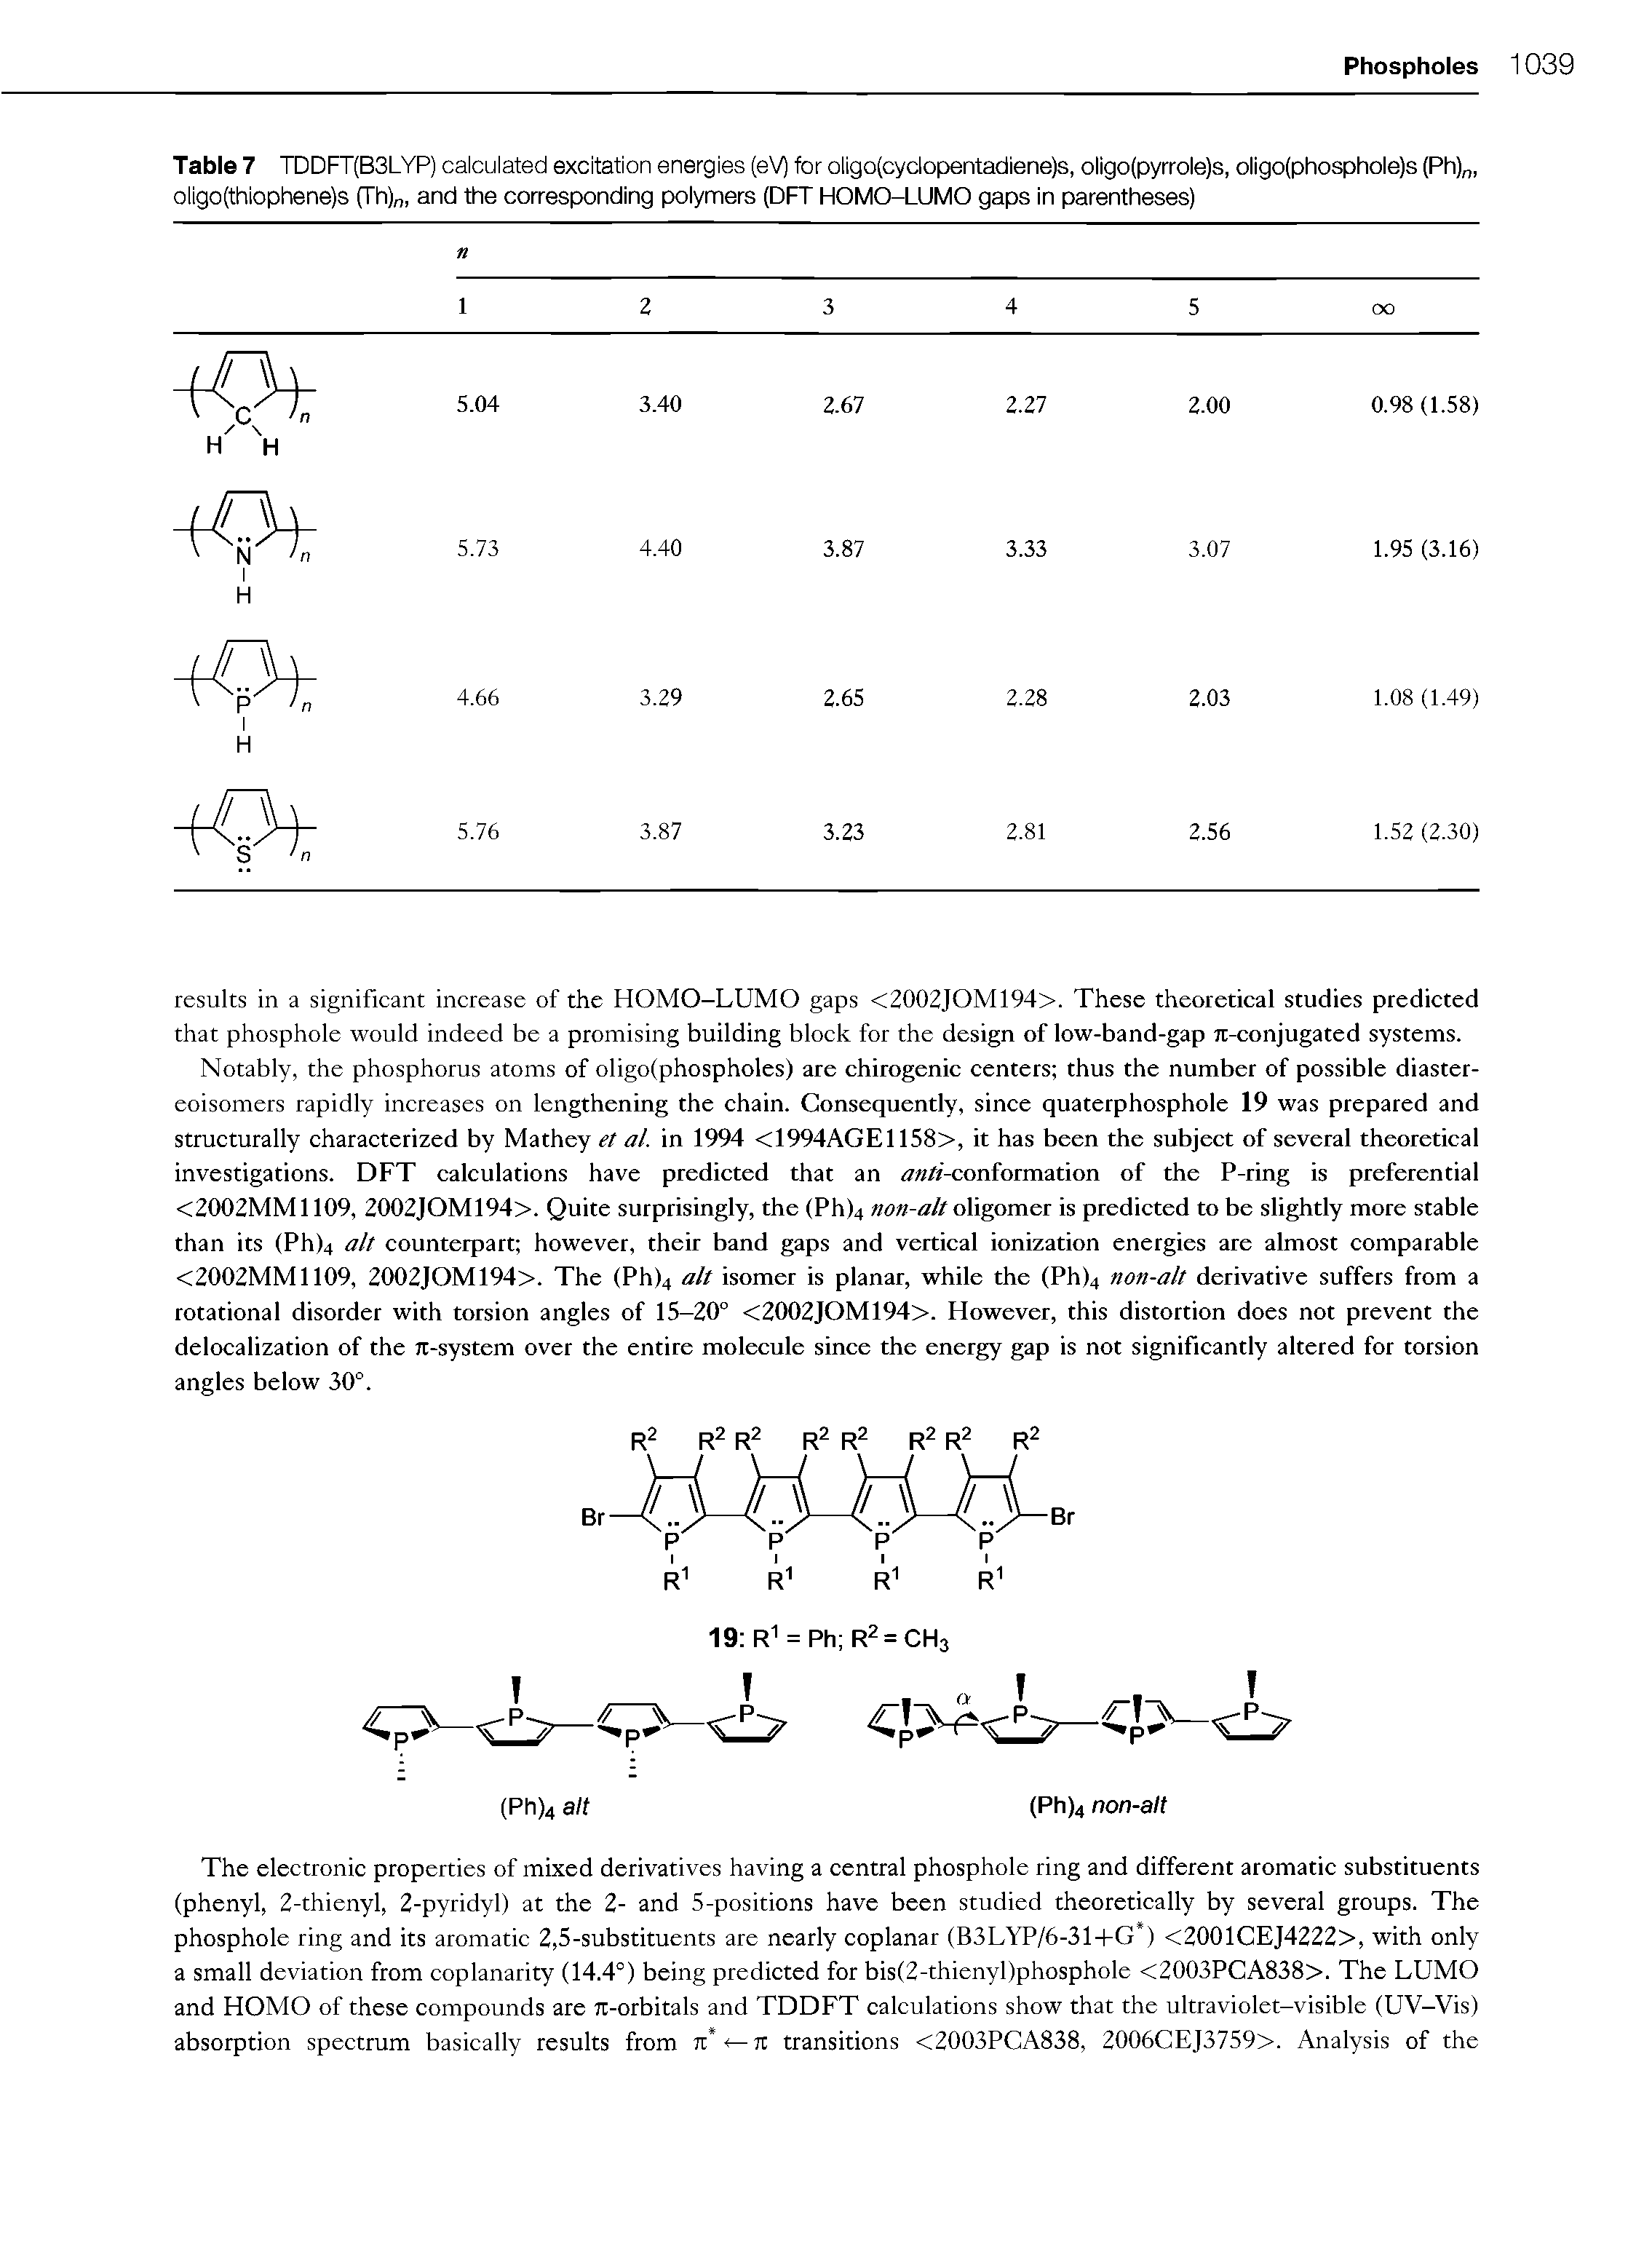 Table TDDFT(B3LYP) calculated excitation energies (eV) for oligo(cyclopentadiene)s, oligo(pyrrole)s, oligo(phosphole)s (Ph) ollgo(thlophene)s (Th)n, and the corresponding polymers (DFT HOMO-LUMO gaps in parentheses)...